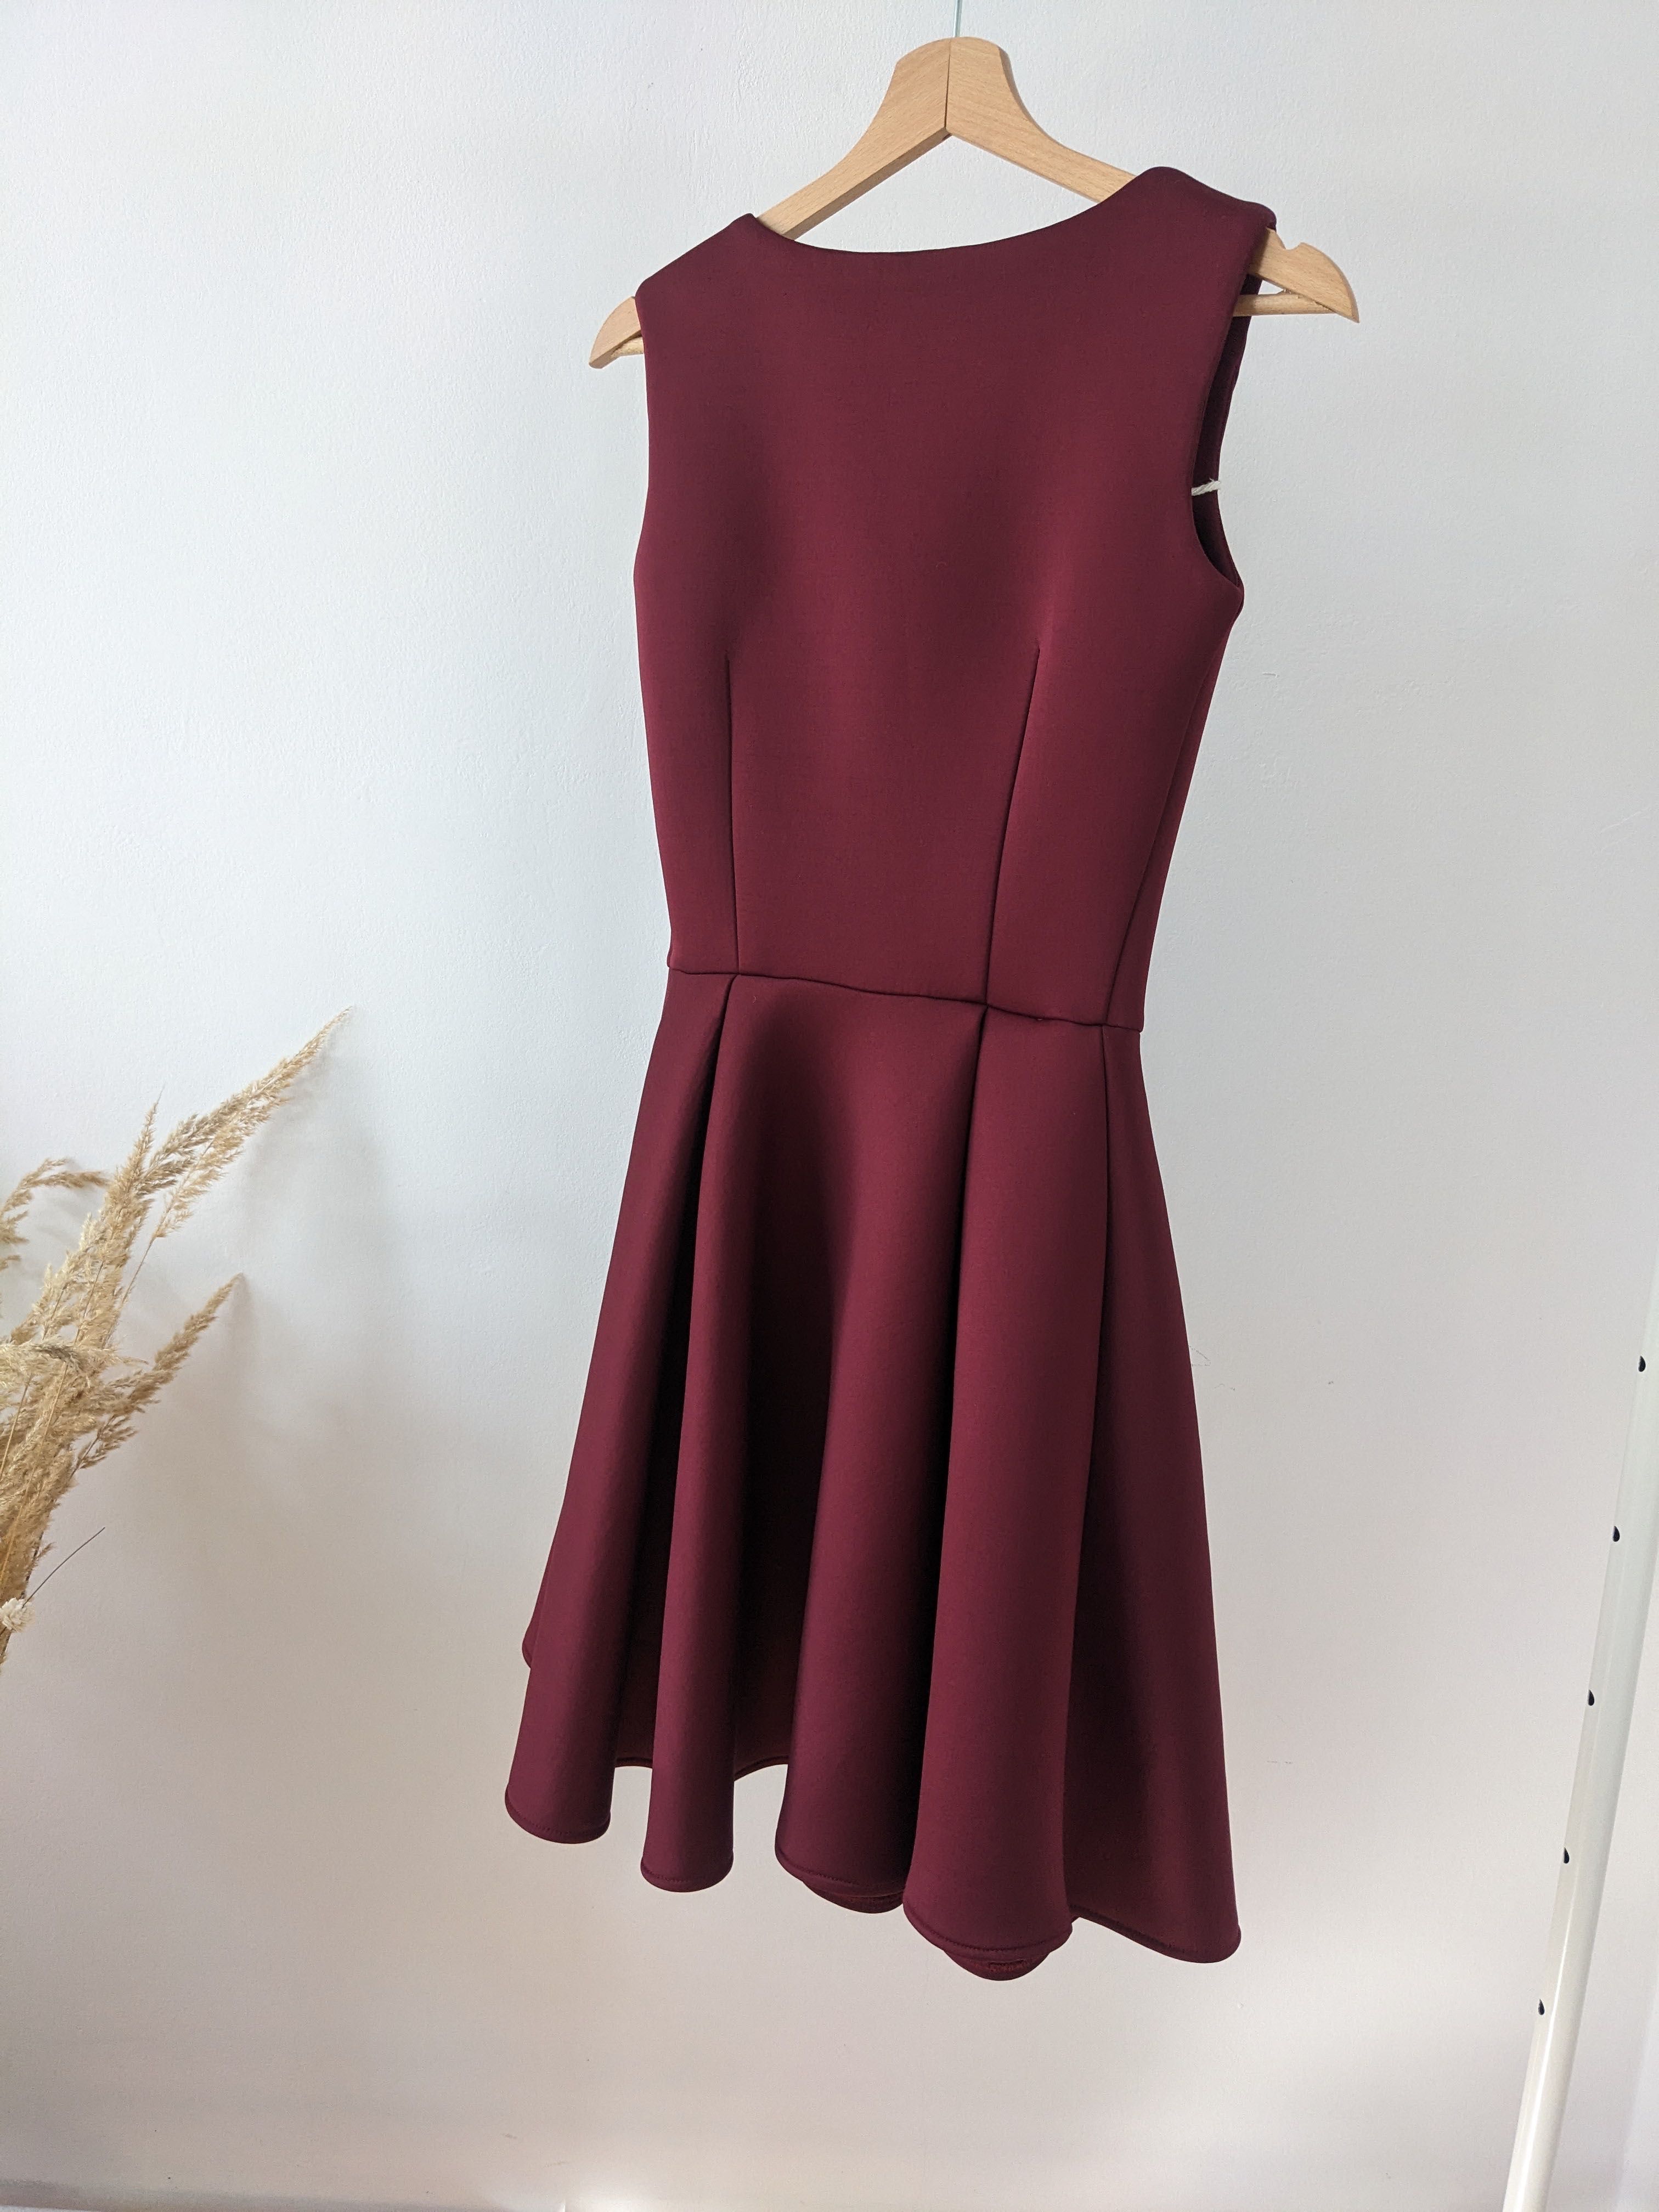 VUBU NOWA elegancka bordowa czerwona rozkloszowana sukienka S 36